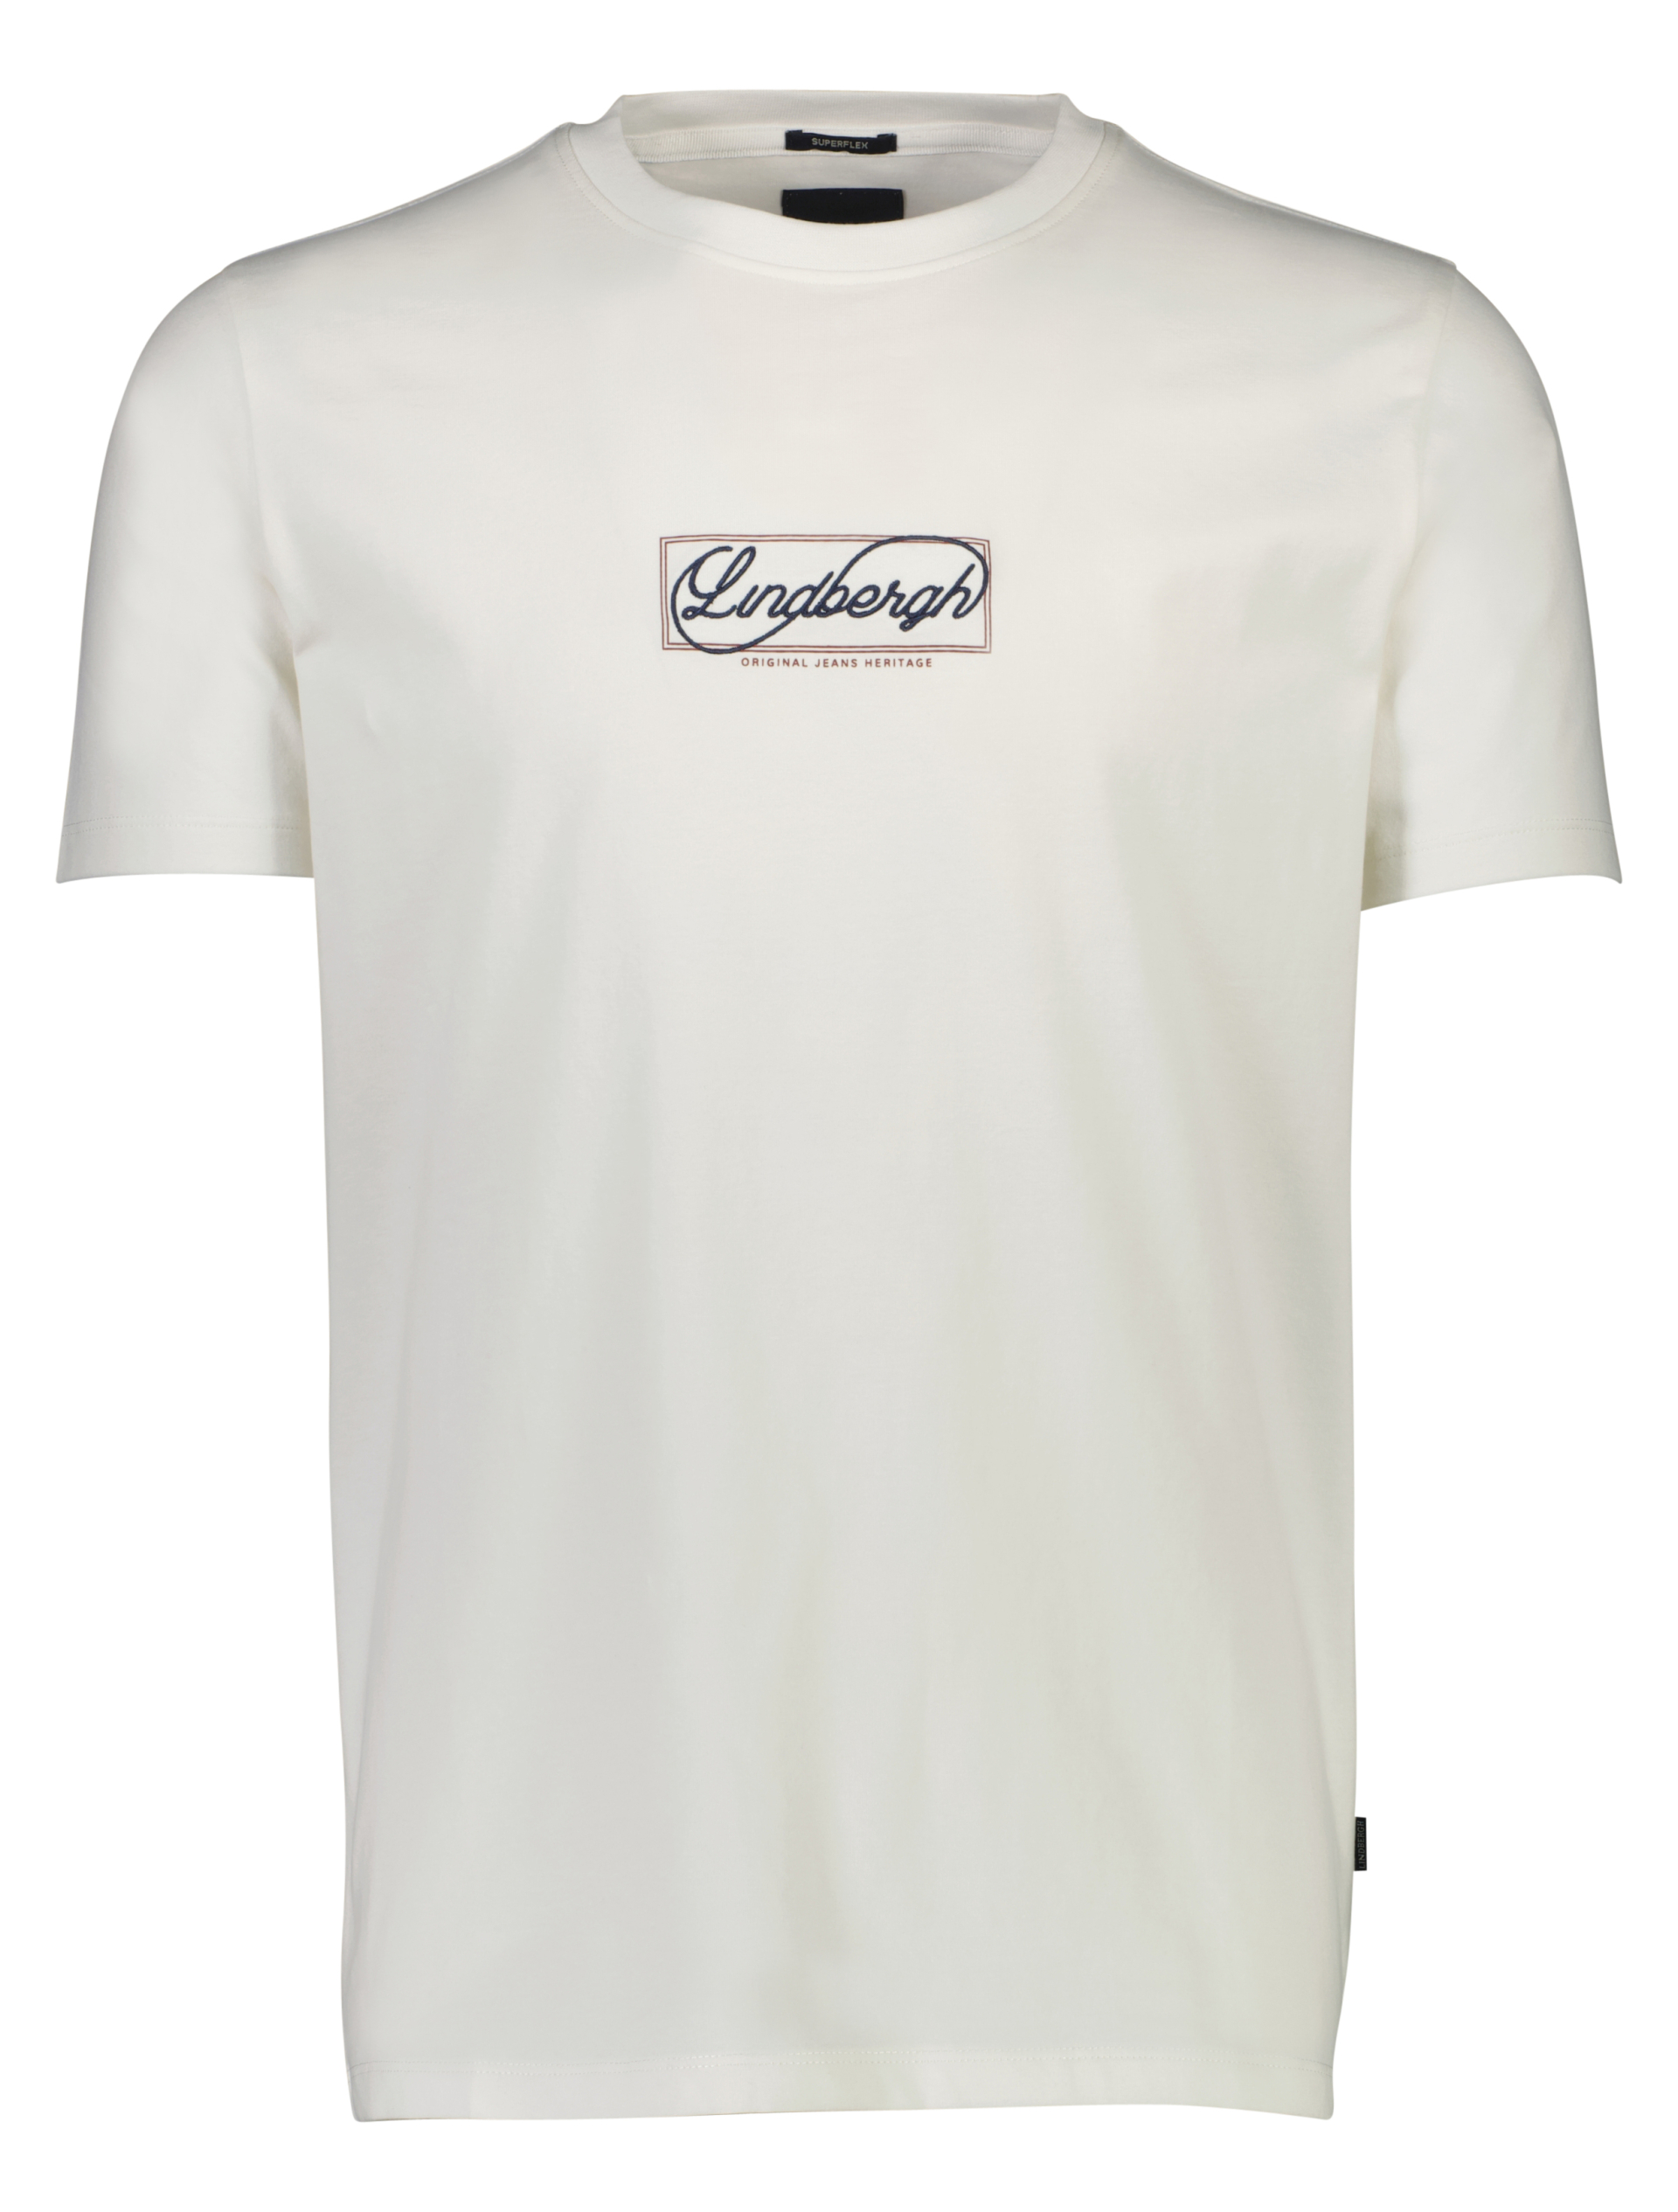 Lindbergh T-shirt weiss / off white